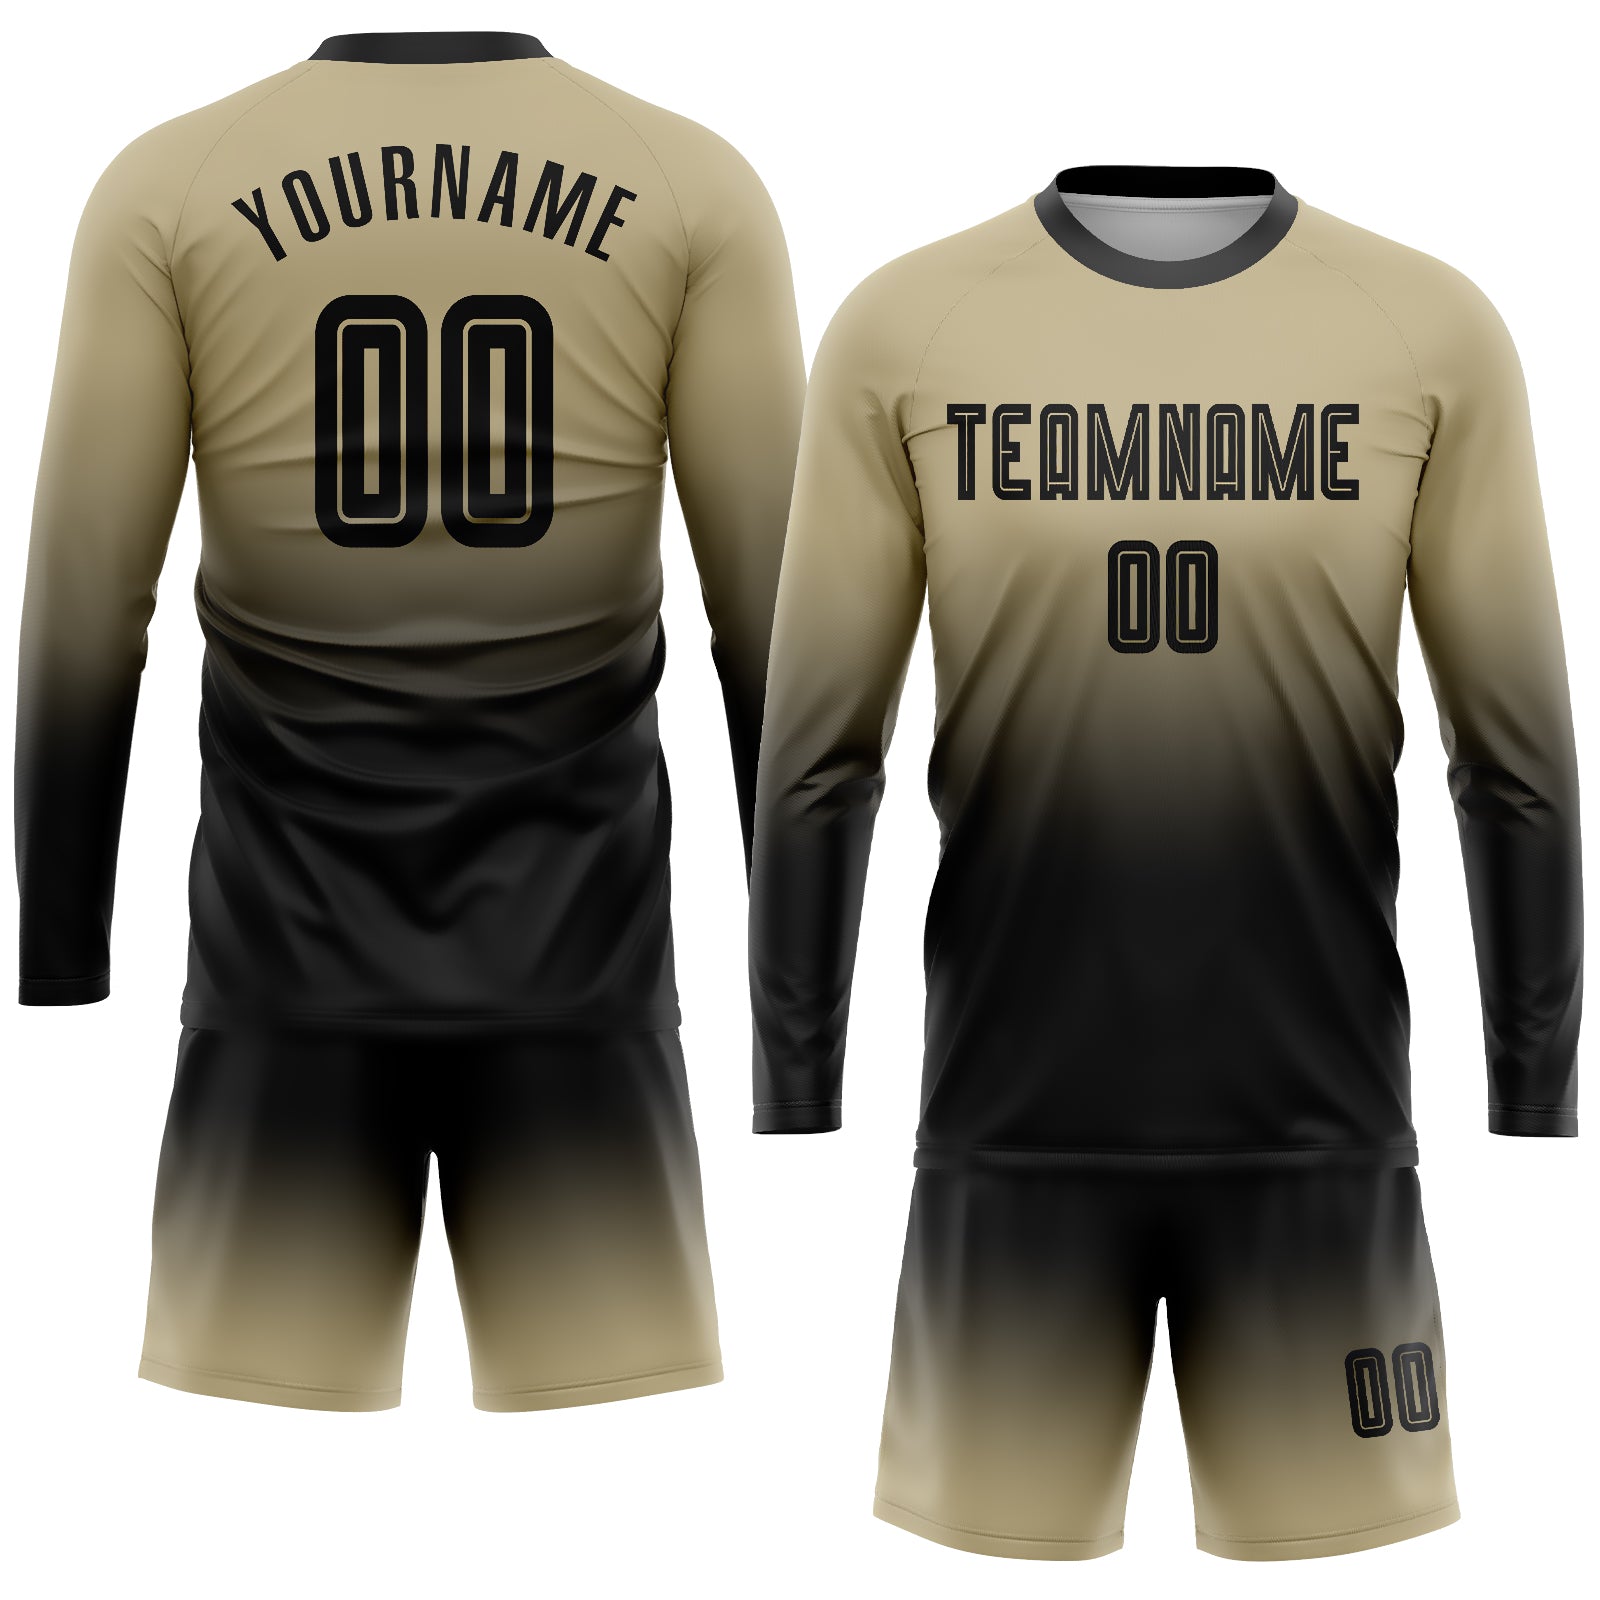 FANSIDEA Custom Gold Black-White Sublimation Soccer Uniform Jersey Women's Size:XL